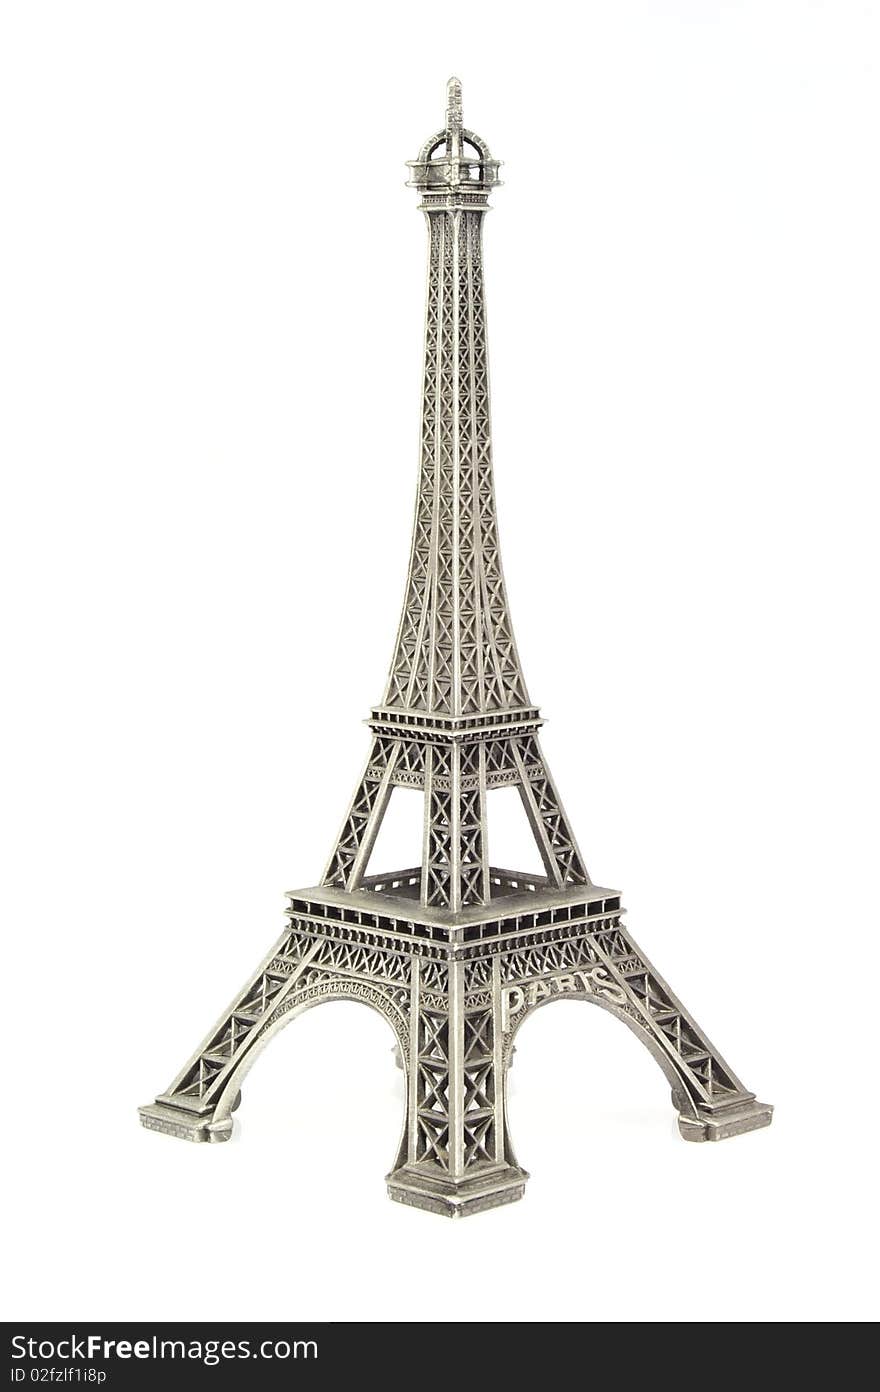 Figurine of Eiffel tower. A souvenir from Paris.